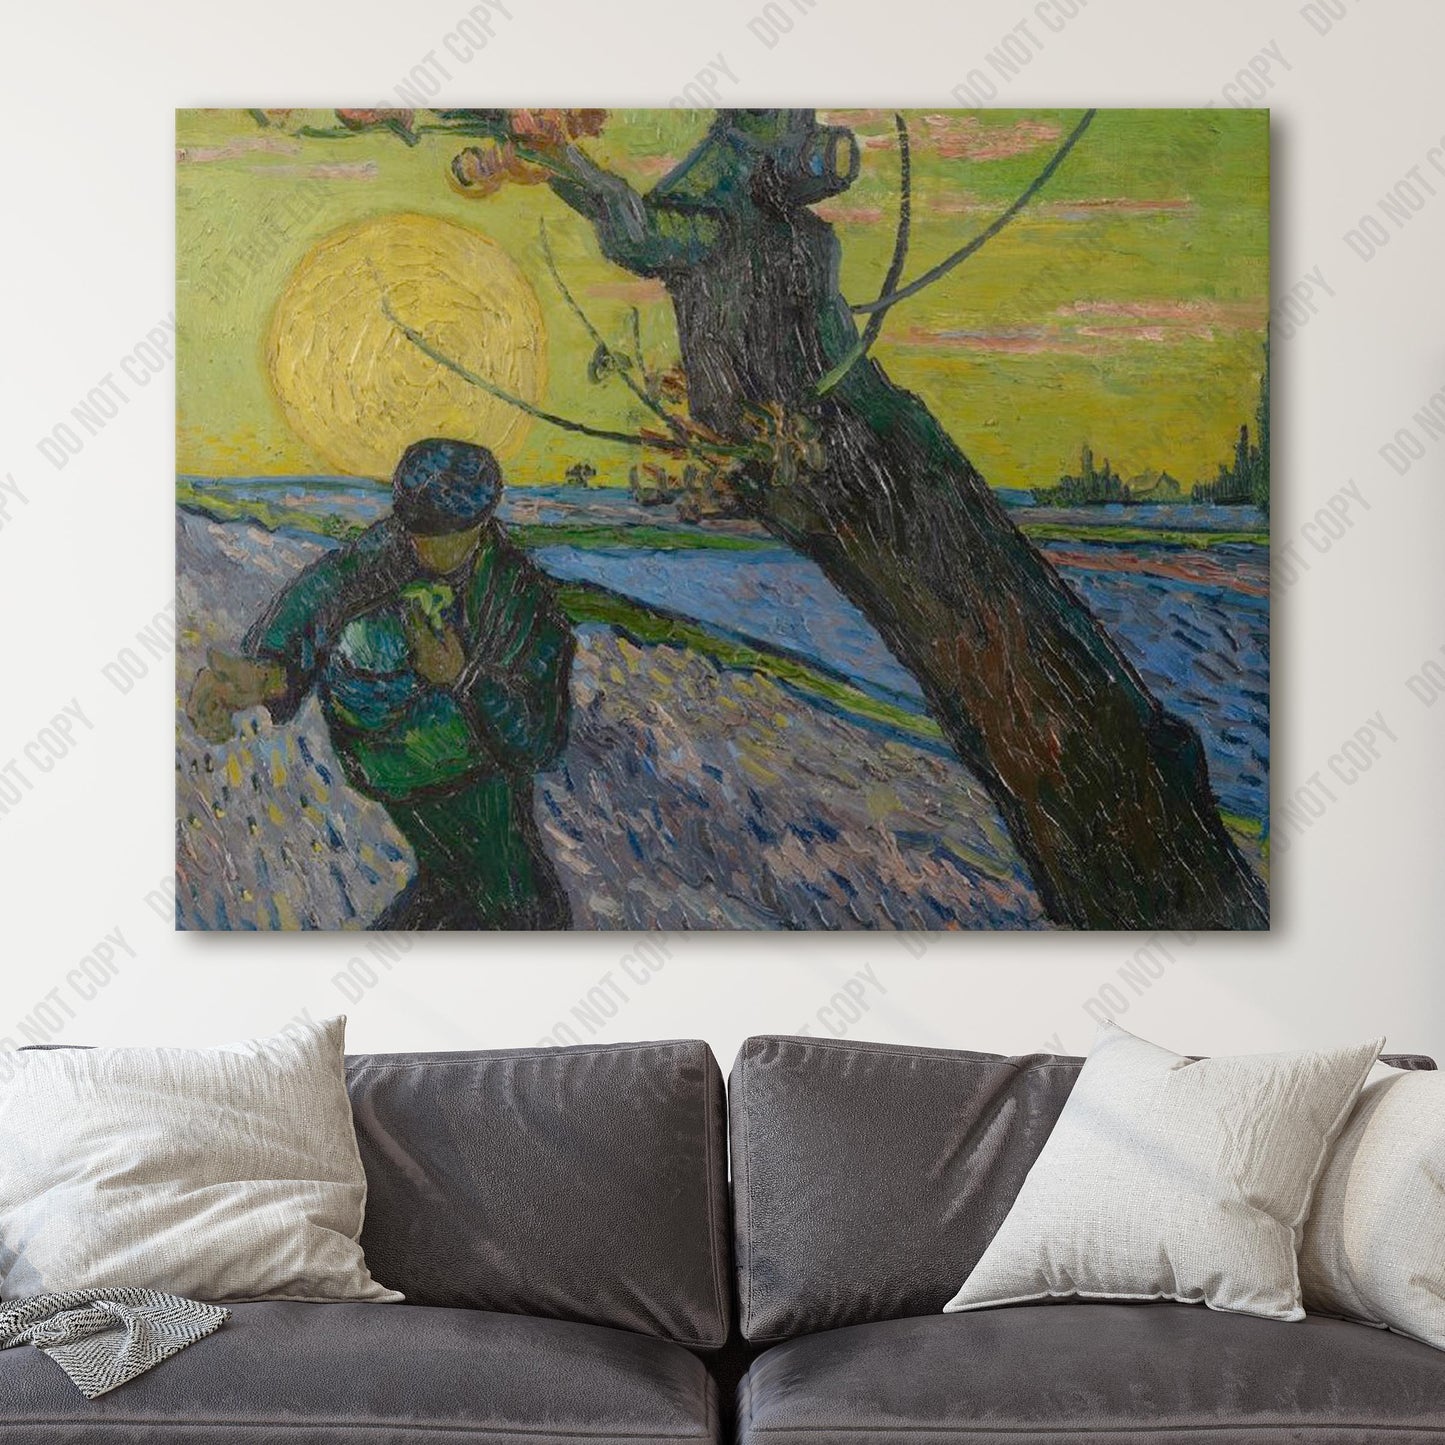 The Sower (1888) by Van Gogh